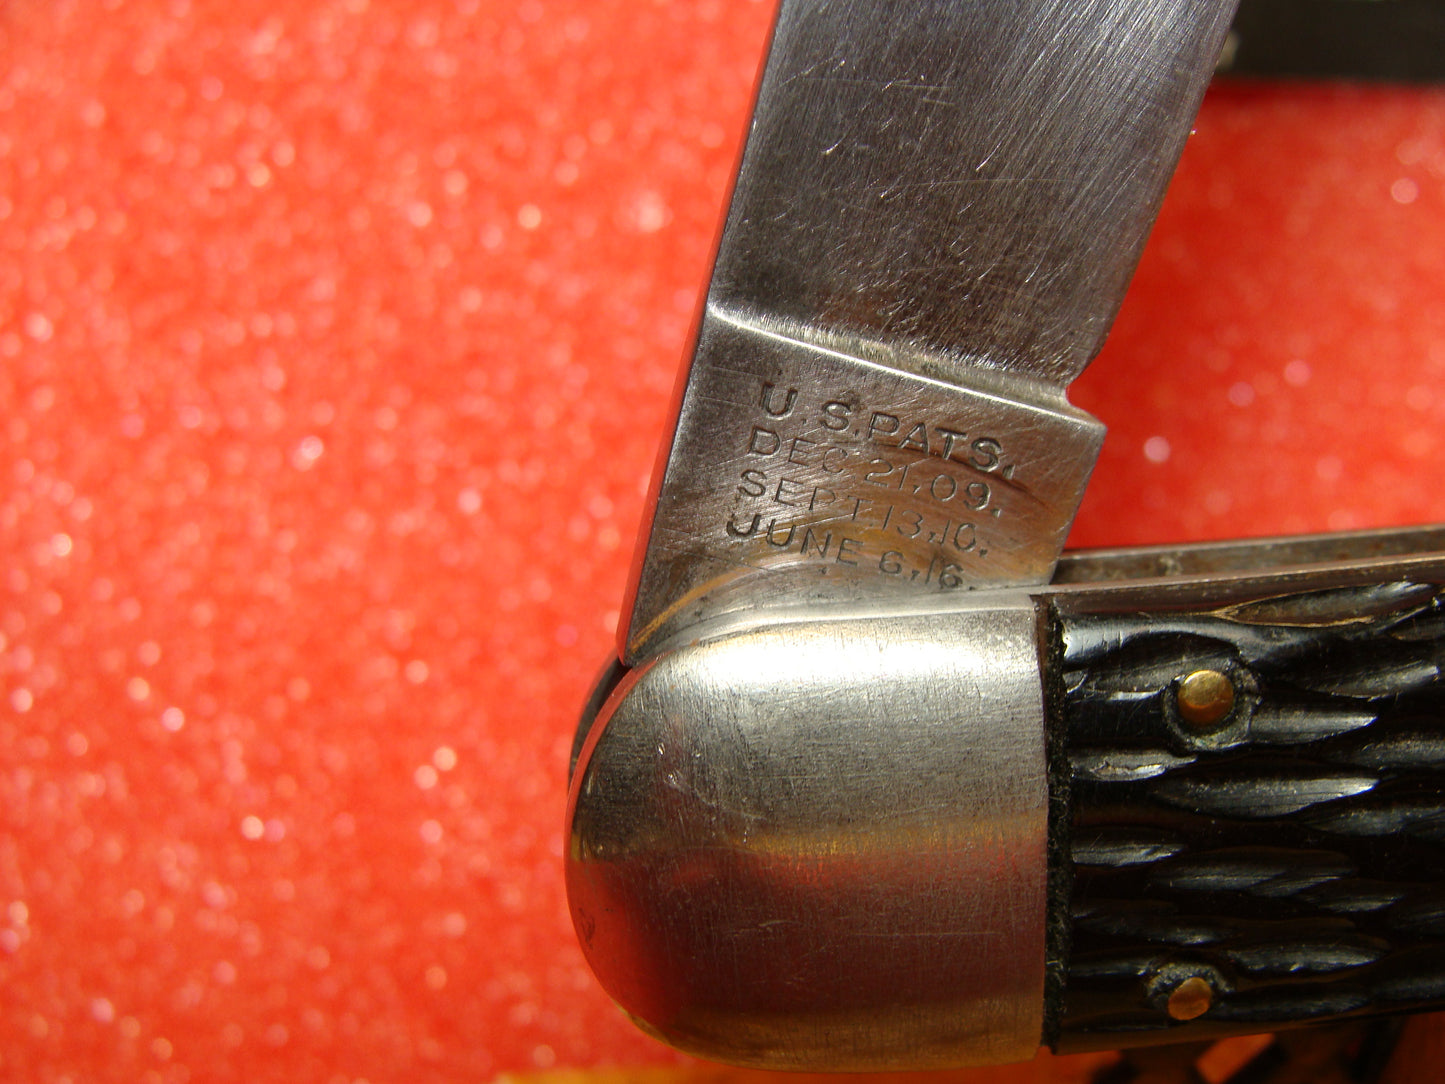 SCHRADE CUT CO. WALDEN NY 1916-46 VINTAGE AMERICAN AUTOMATIC KNIFE 4 7/8" HUNTER BLACK IMITATION JIGGED HANDLES